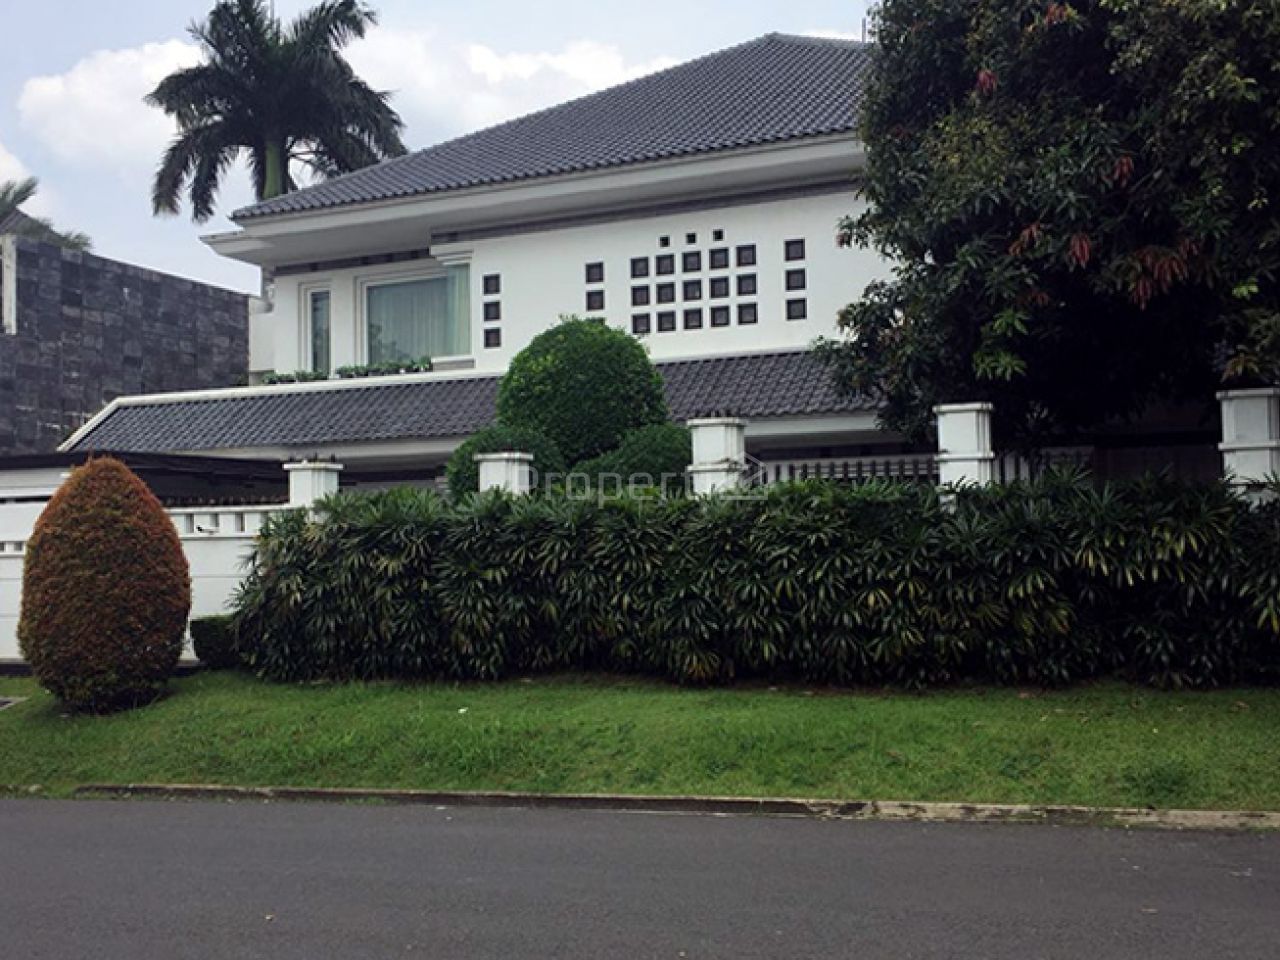 Roadside Luxury House in Best Area, Pondok Indah, DKI Jakarta